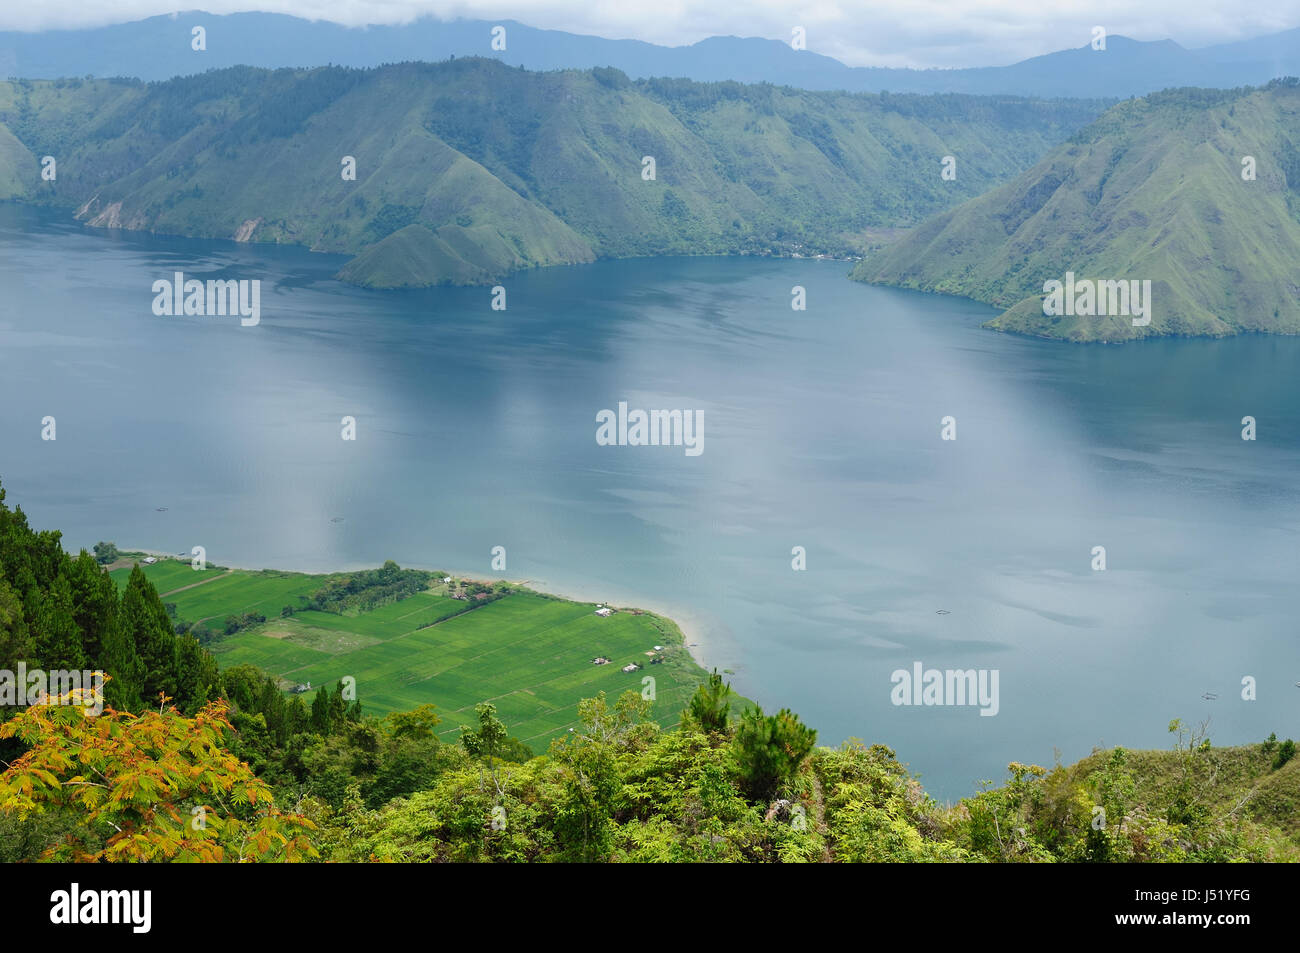 Indonesia, North Sumatra, View from the Samosir island to Danau Toba (Toba lake) Stock Photo